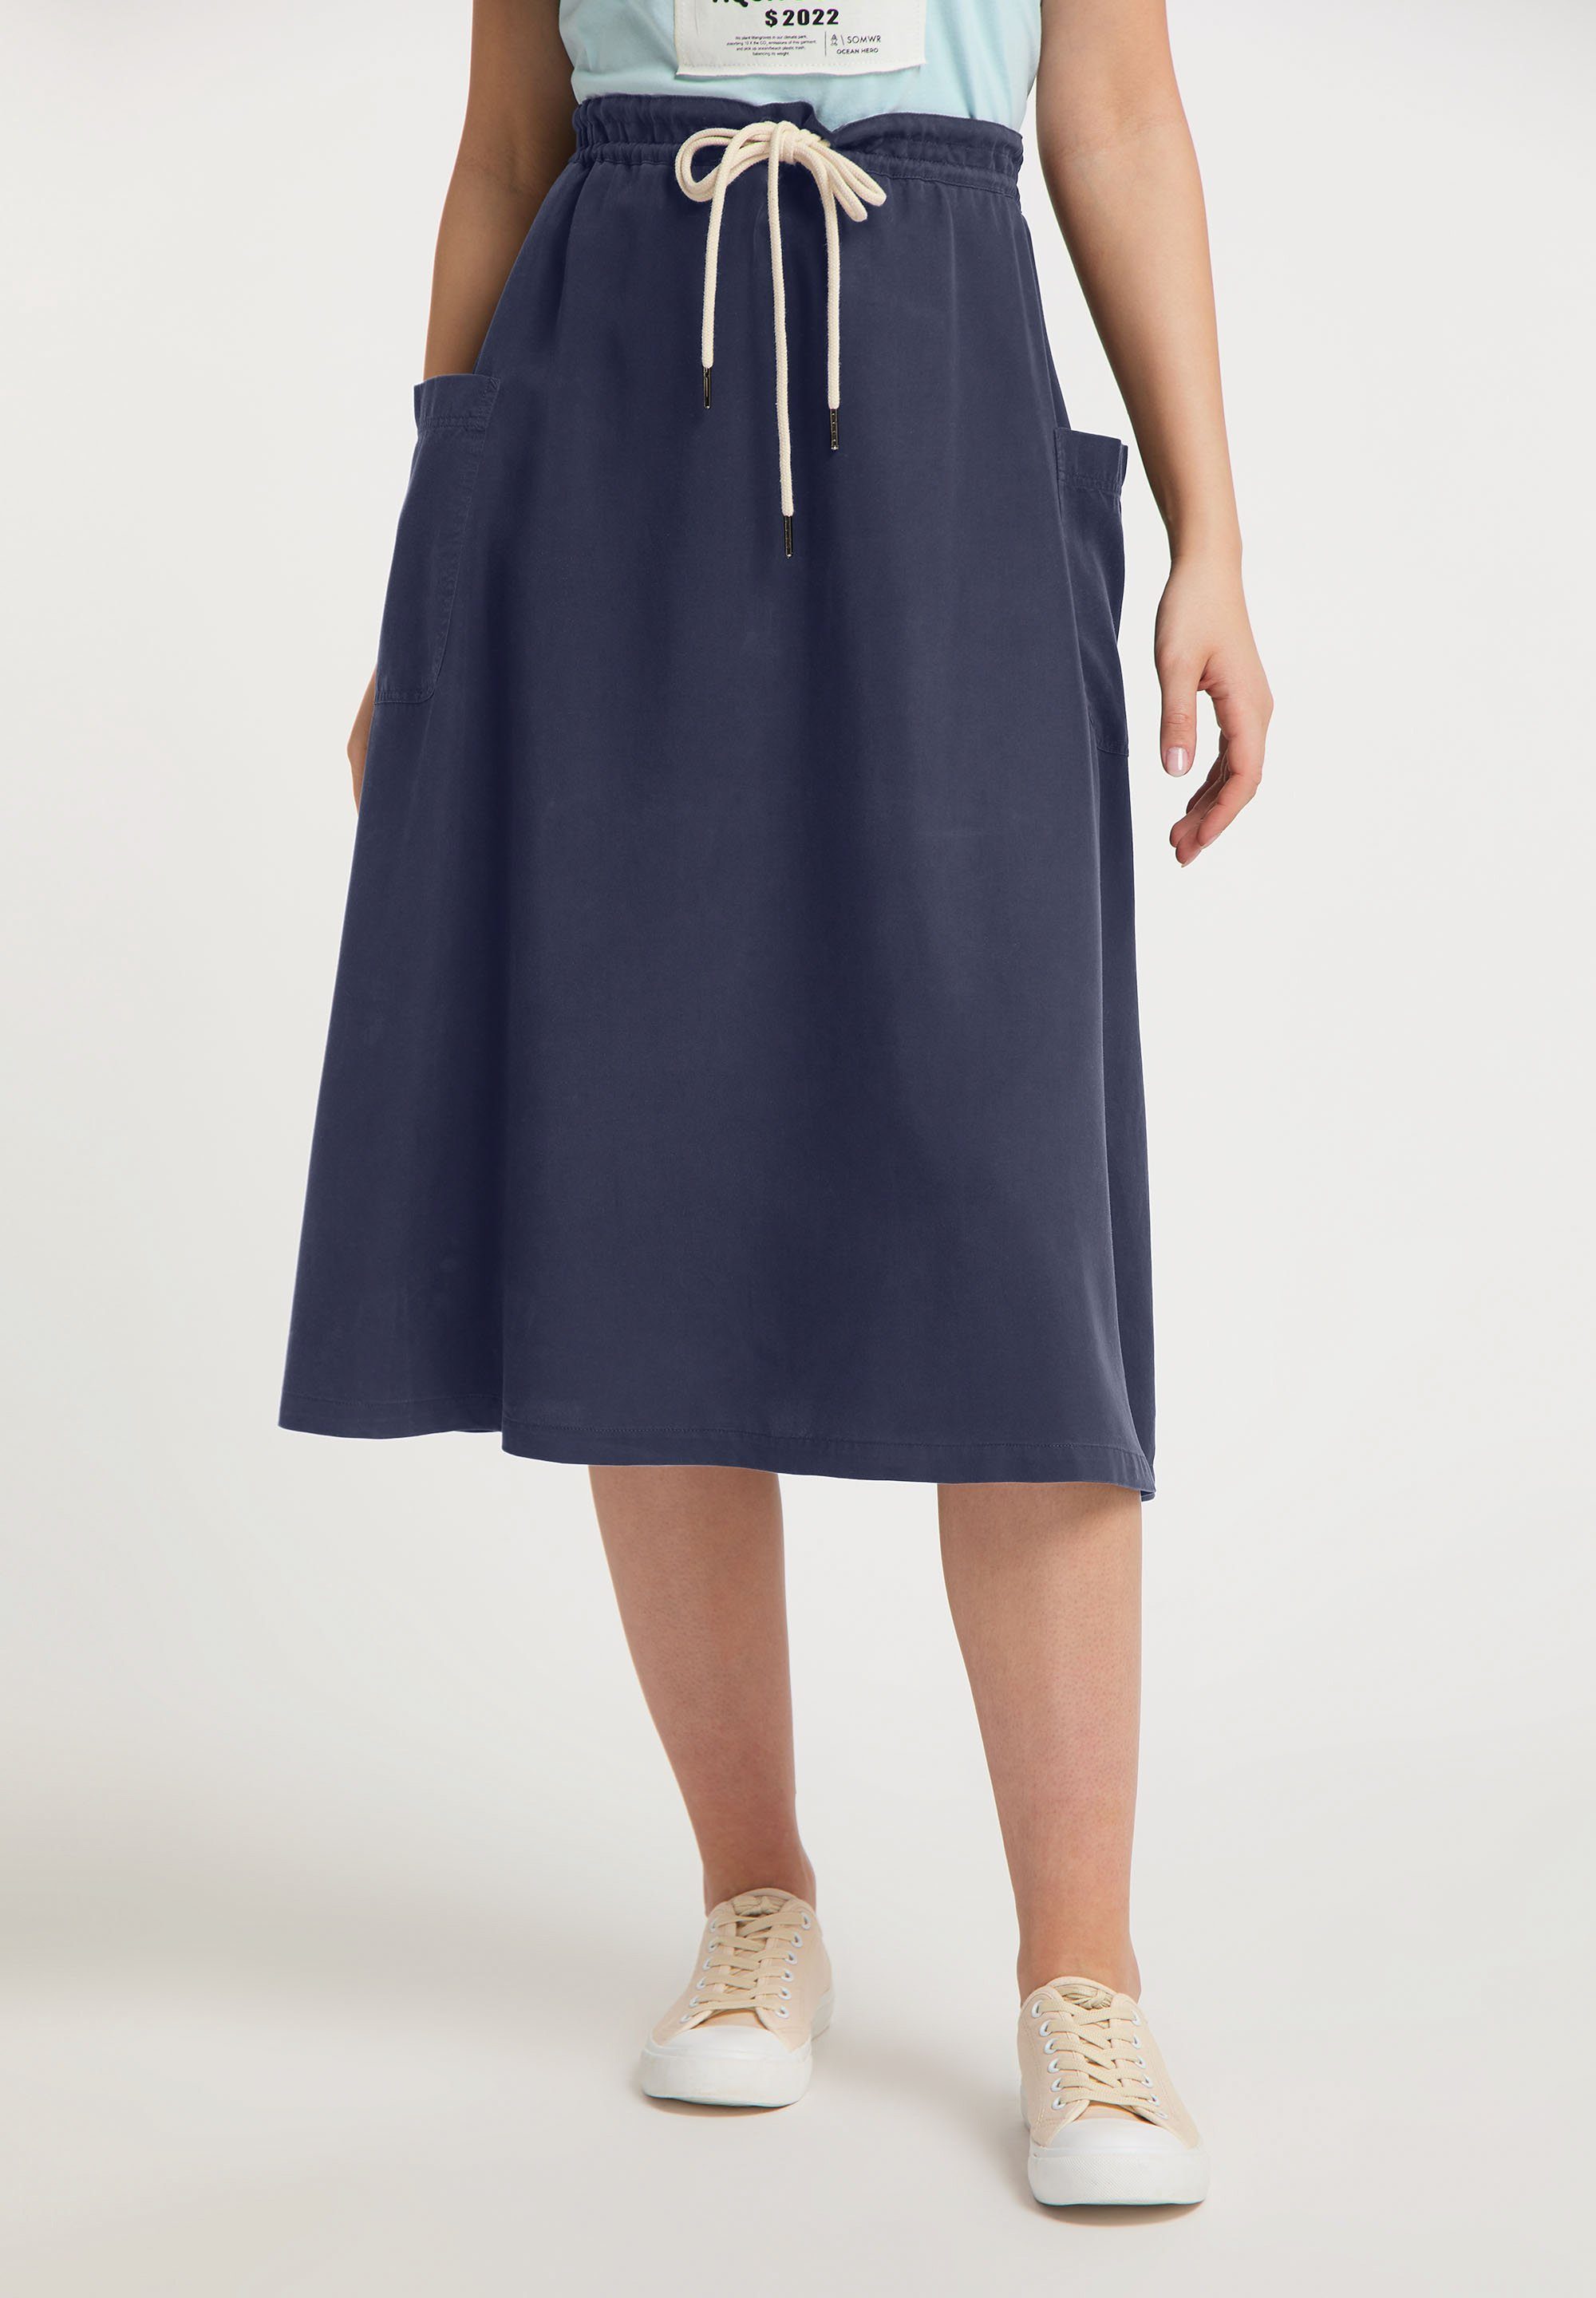 Damen Röcke SOMWR Sommerrock Skirt With Sidepockets 1 Mangrove gepflanzt / 1,1 kg Strand Plastik eingesammelt